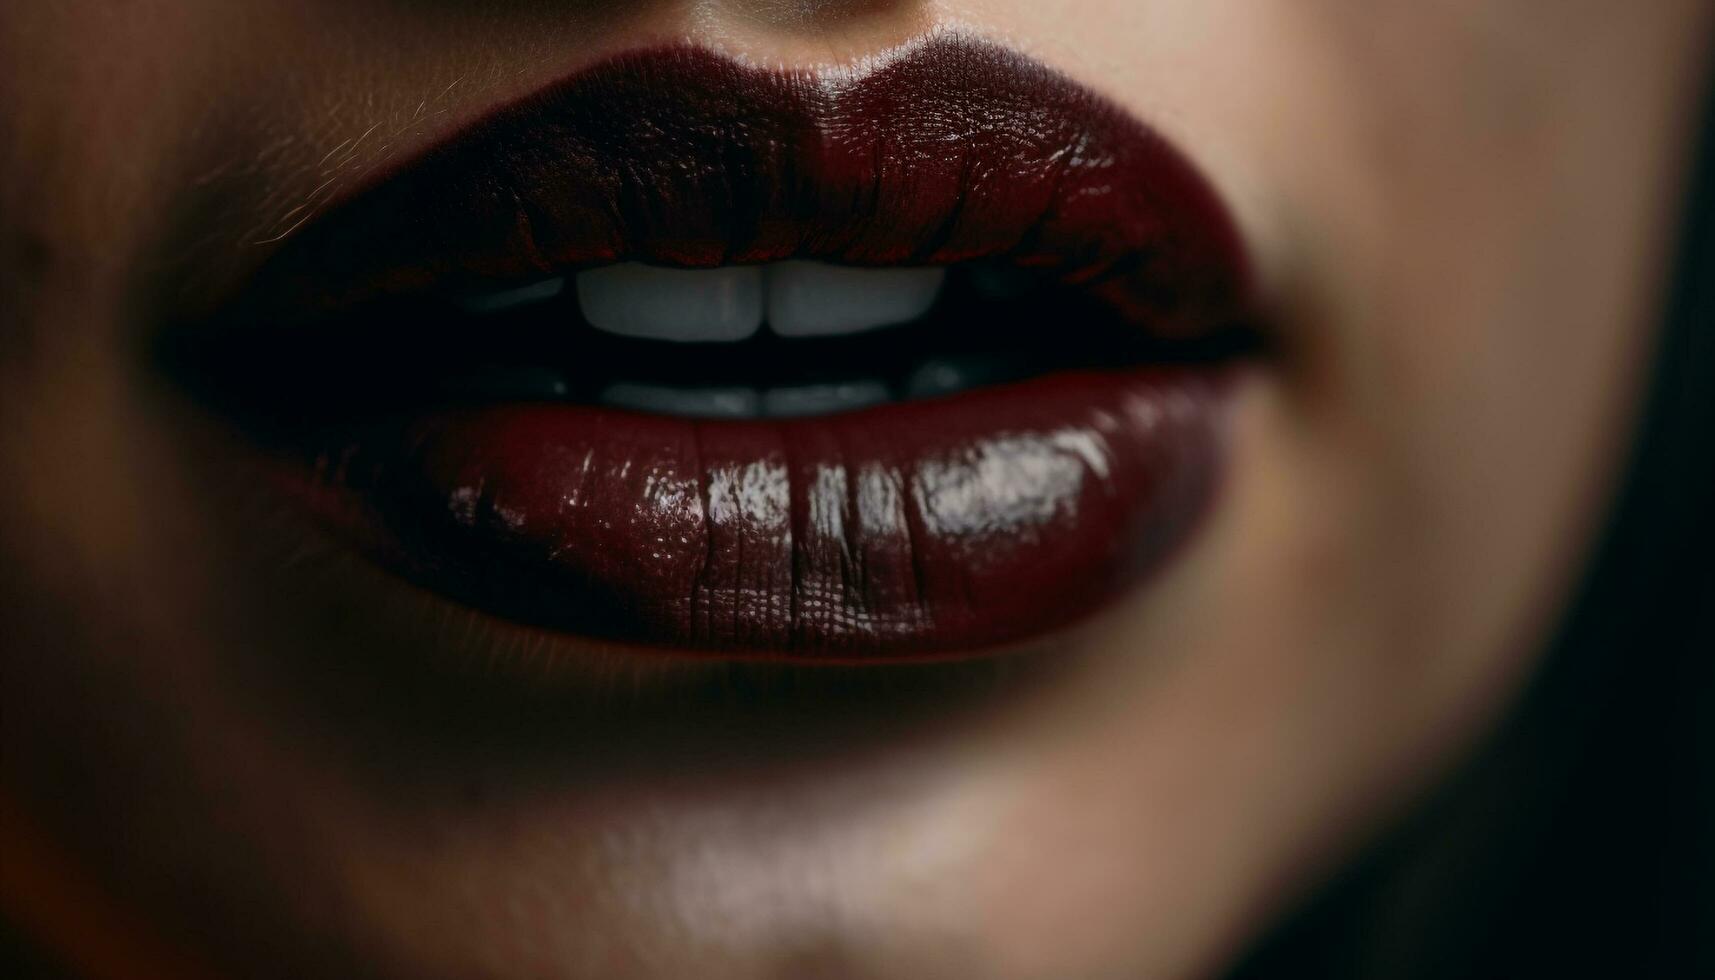 amanda loubser share sexy red lips tumblr photos